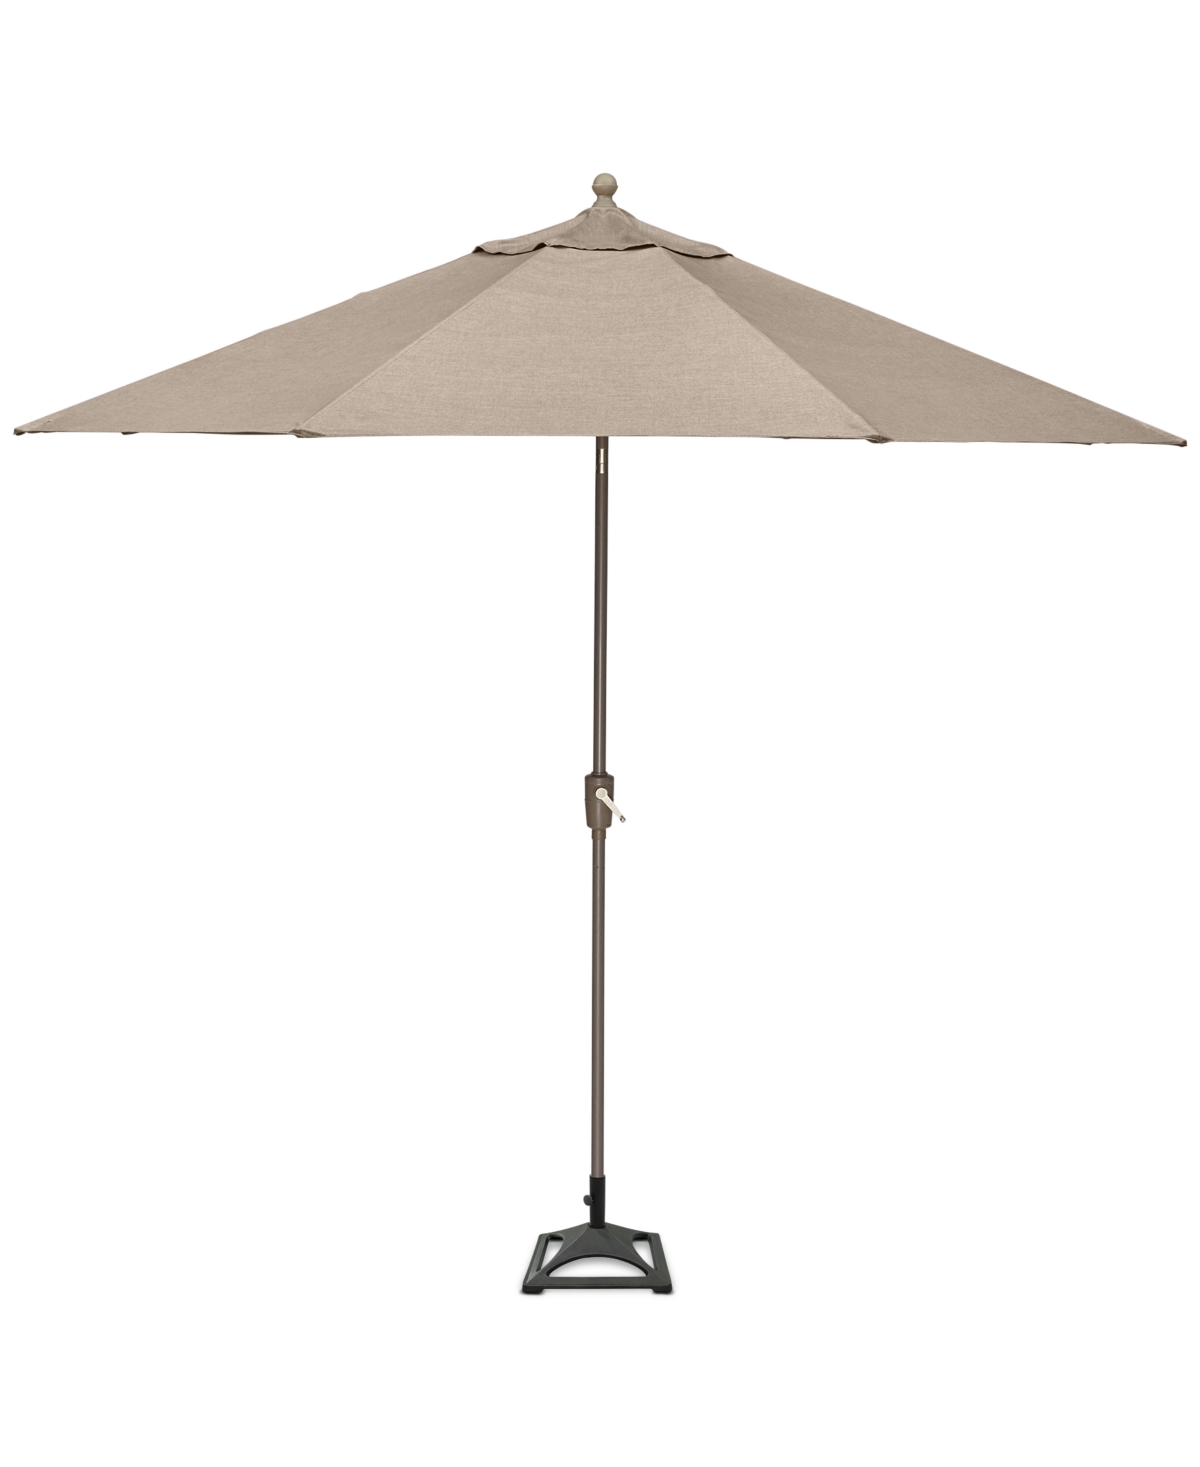 Wayland Outdoor 9 Auto-Tilt Umbrella and Base, Created for Macys